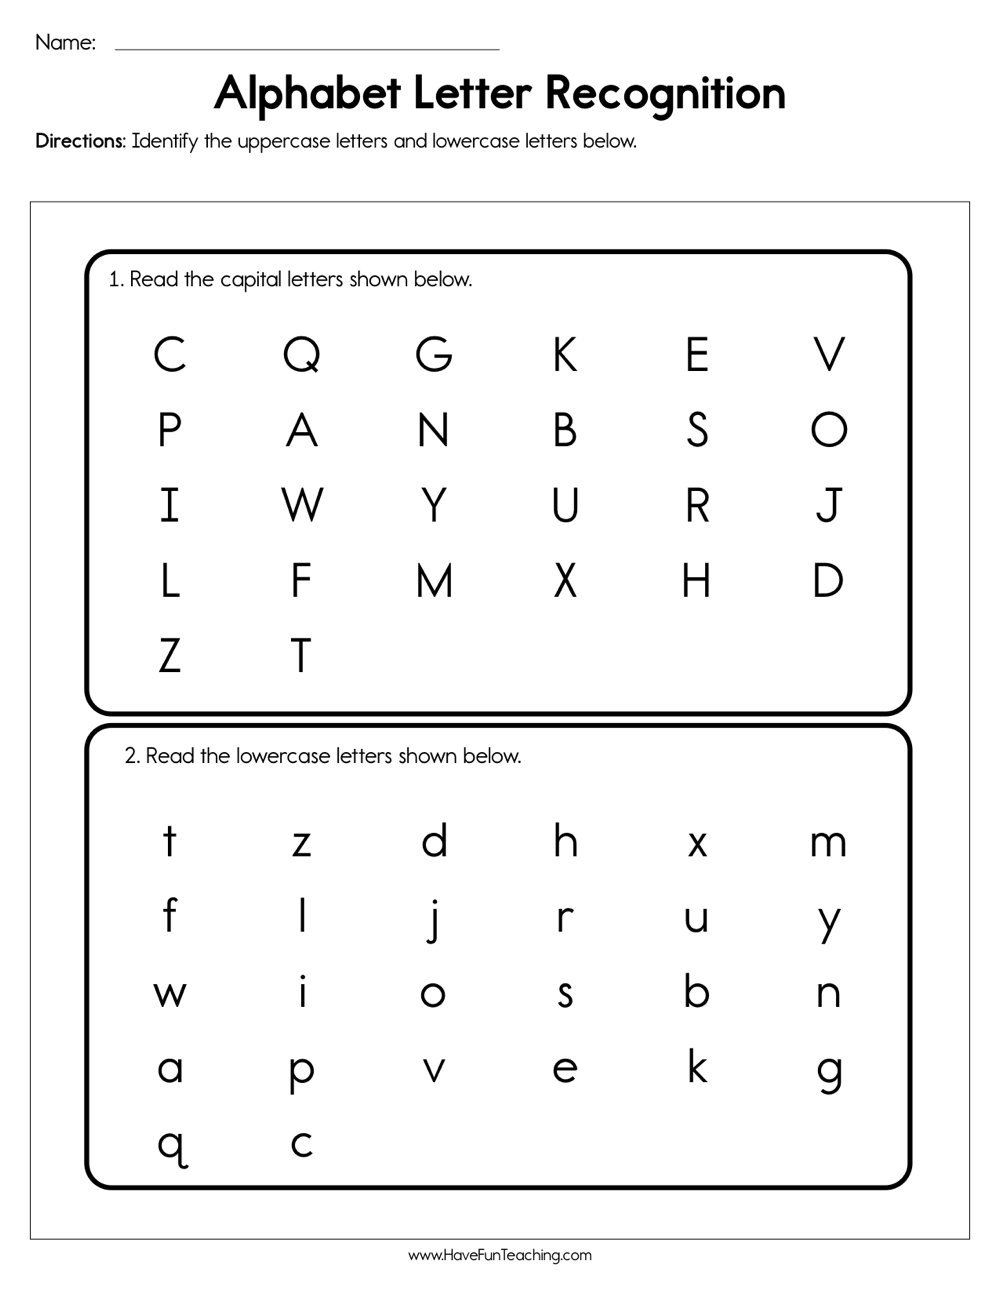 Alphabet Letter Recognition Assessment  Have Fun Teaching With Alphabet Recognition Worksheets For Kindergarten